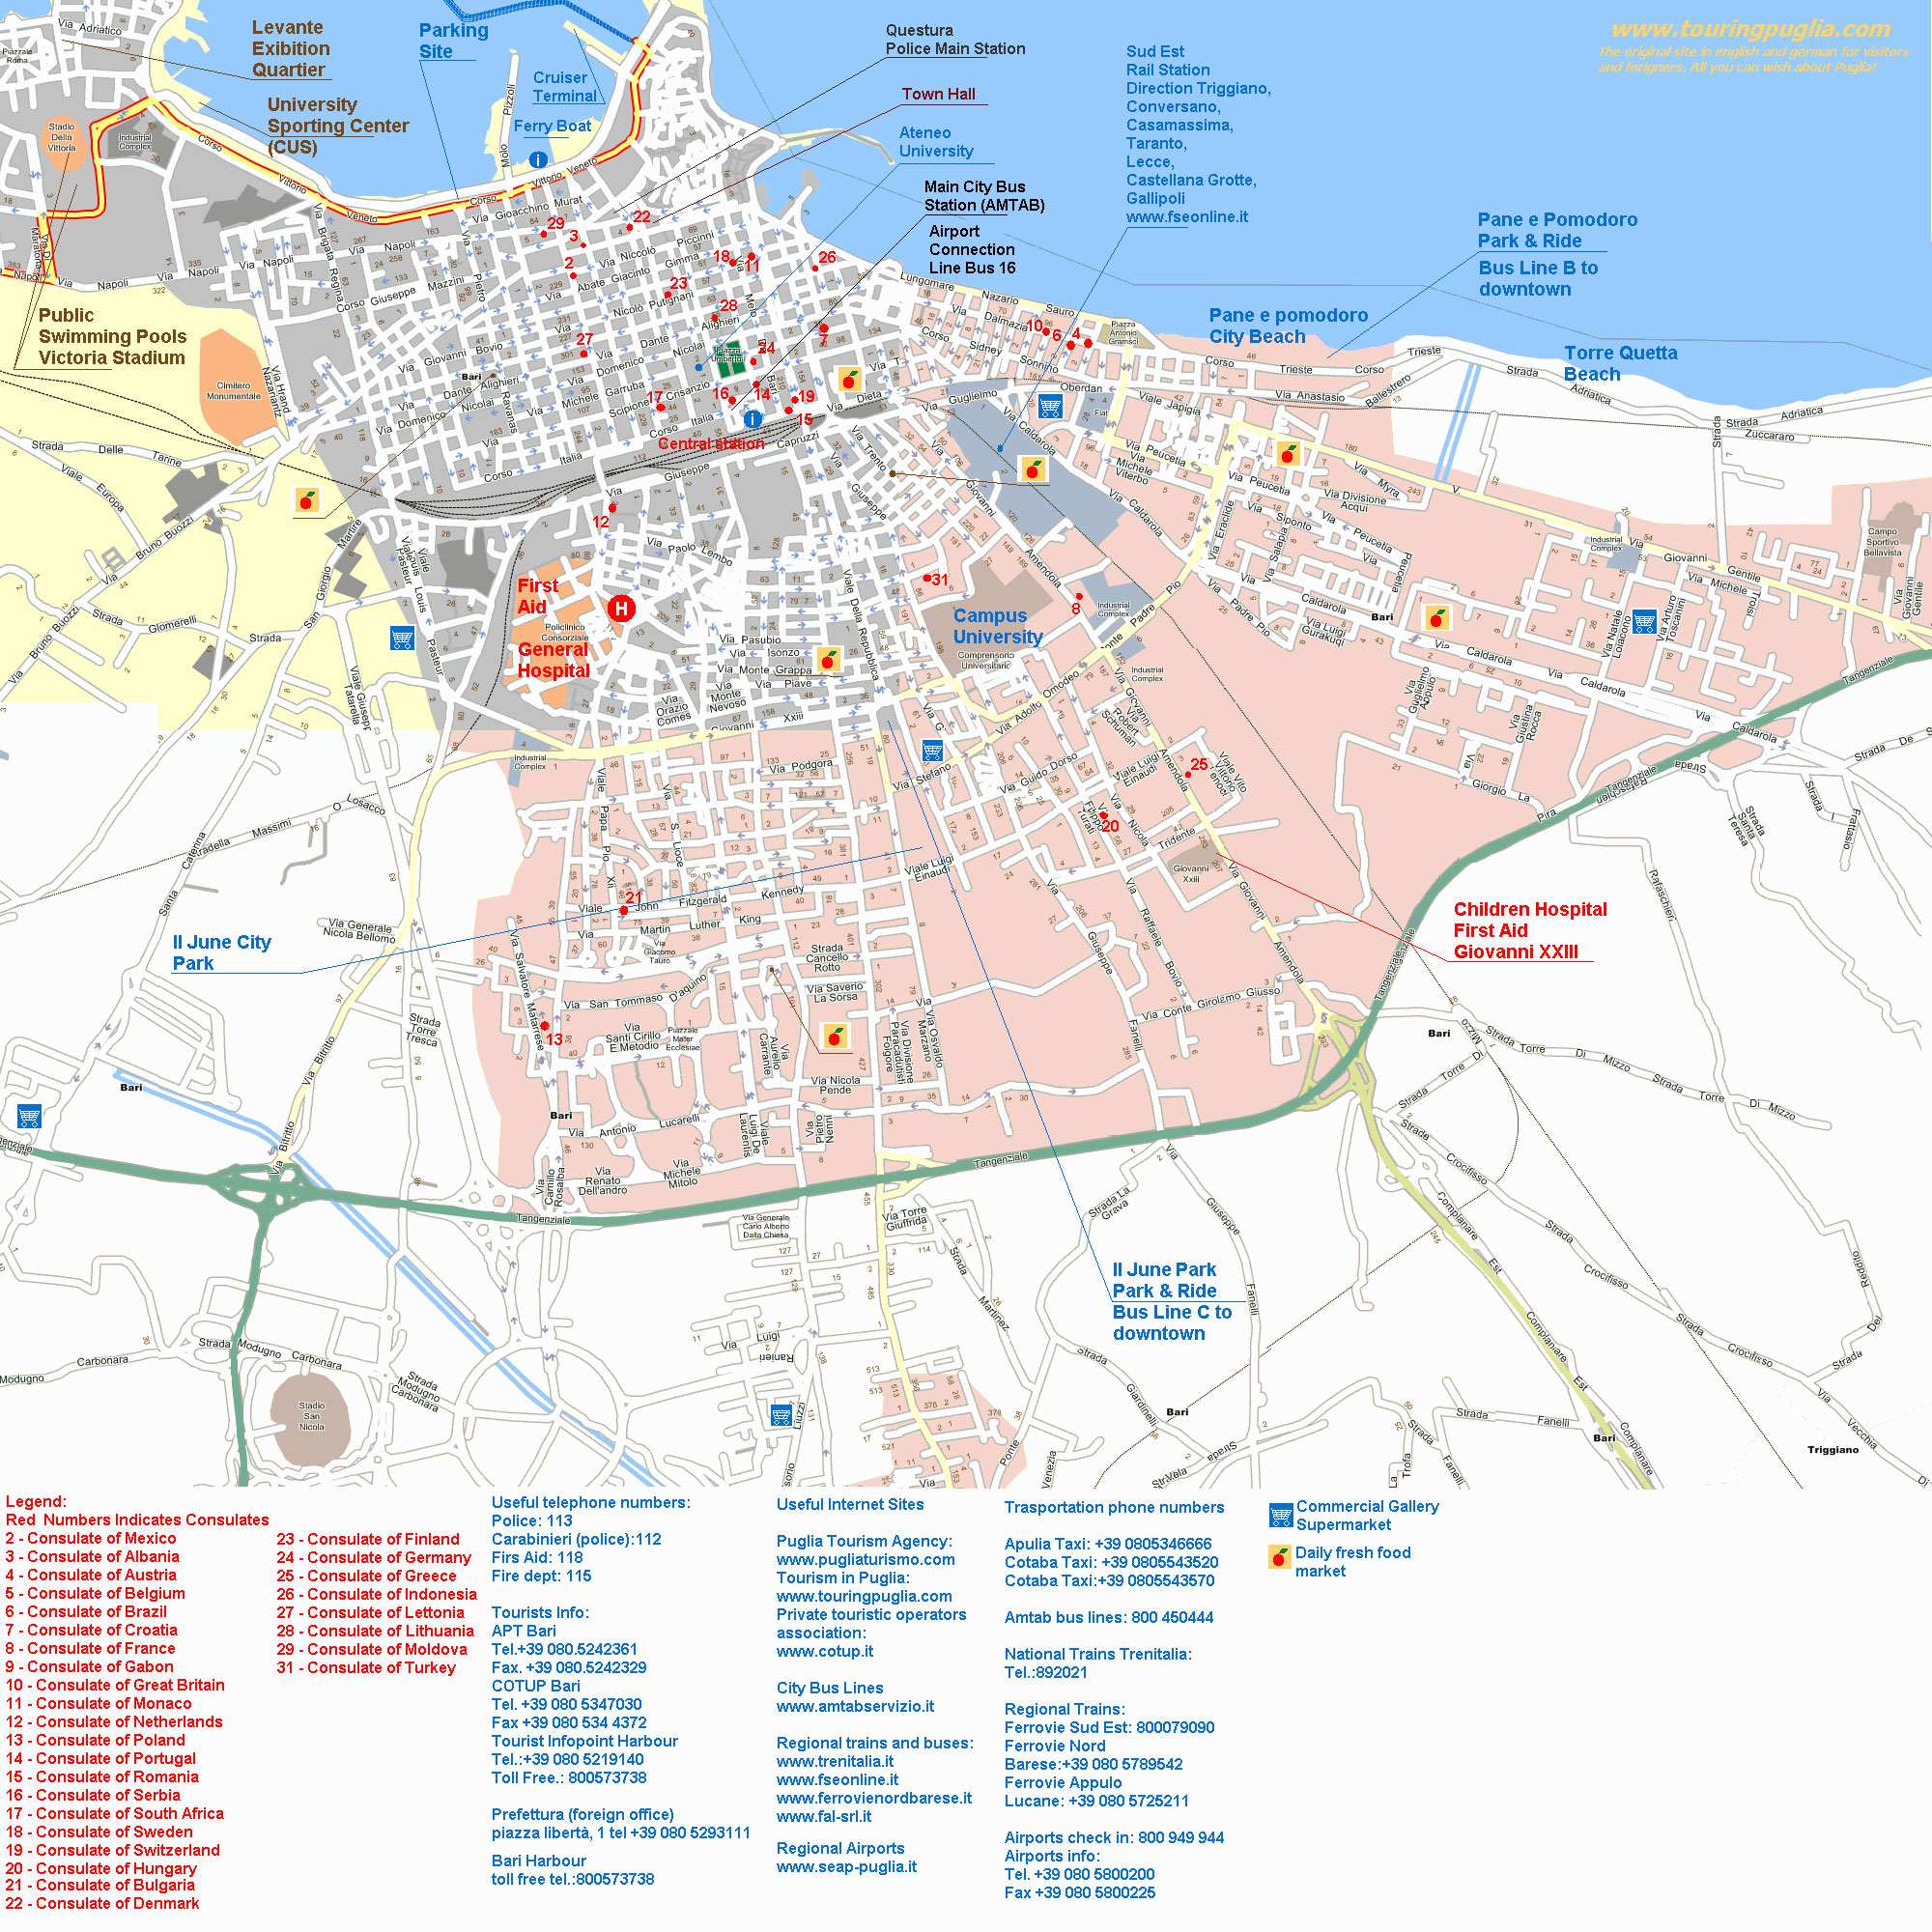 bari tourist map pdf